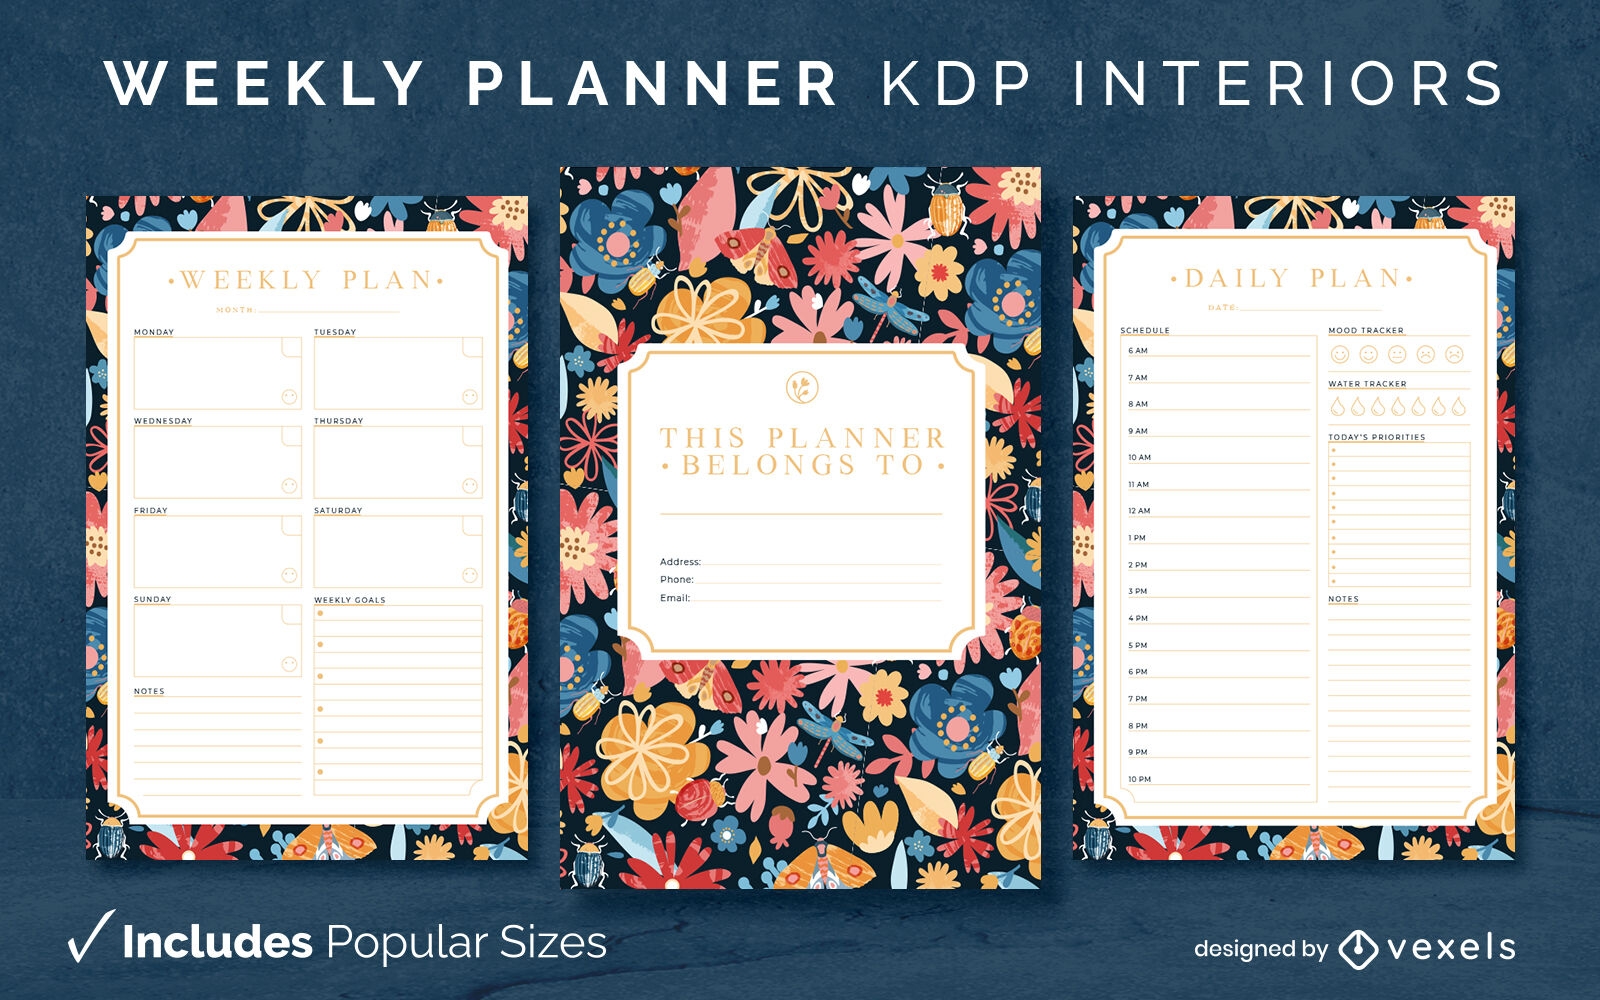 Weekly planner kdp interior design